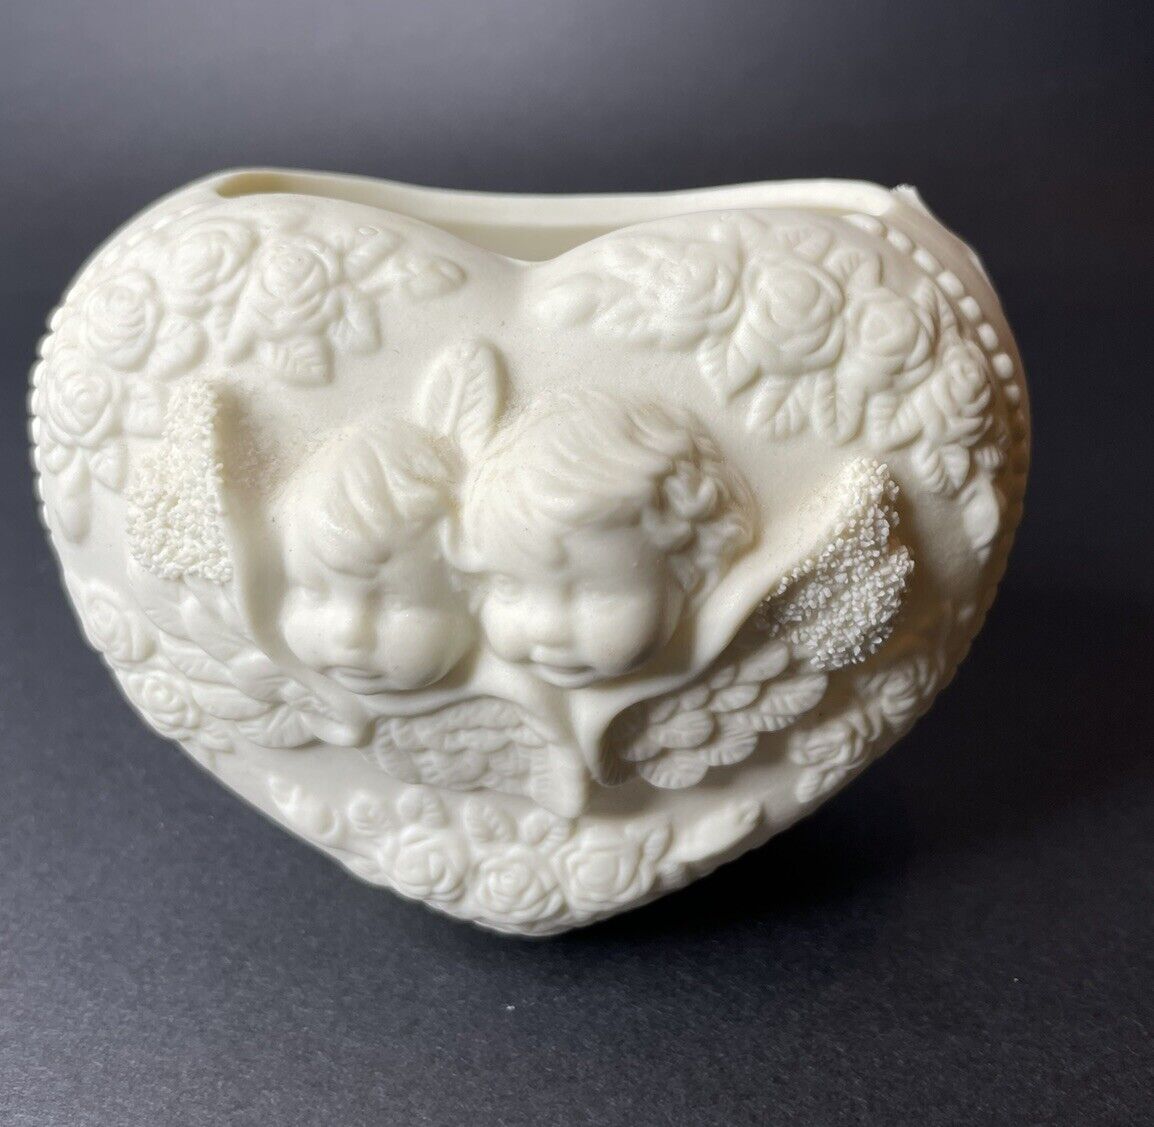 Heart Vase Cherub Angels Figural Ornate Roses Delicate White Porcelain Bisque